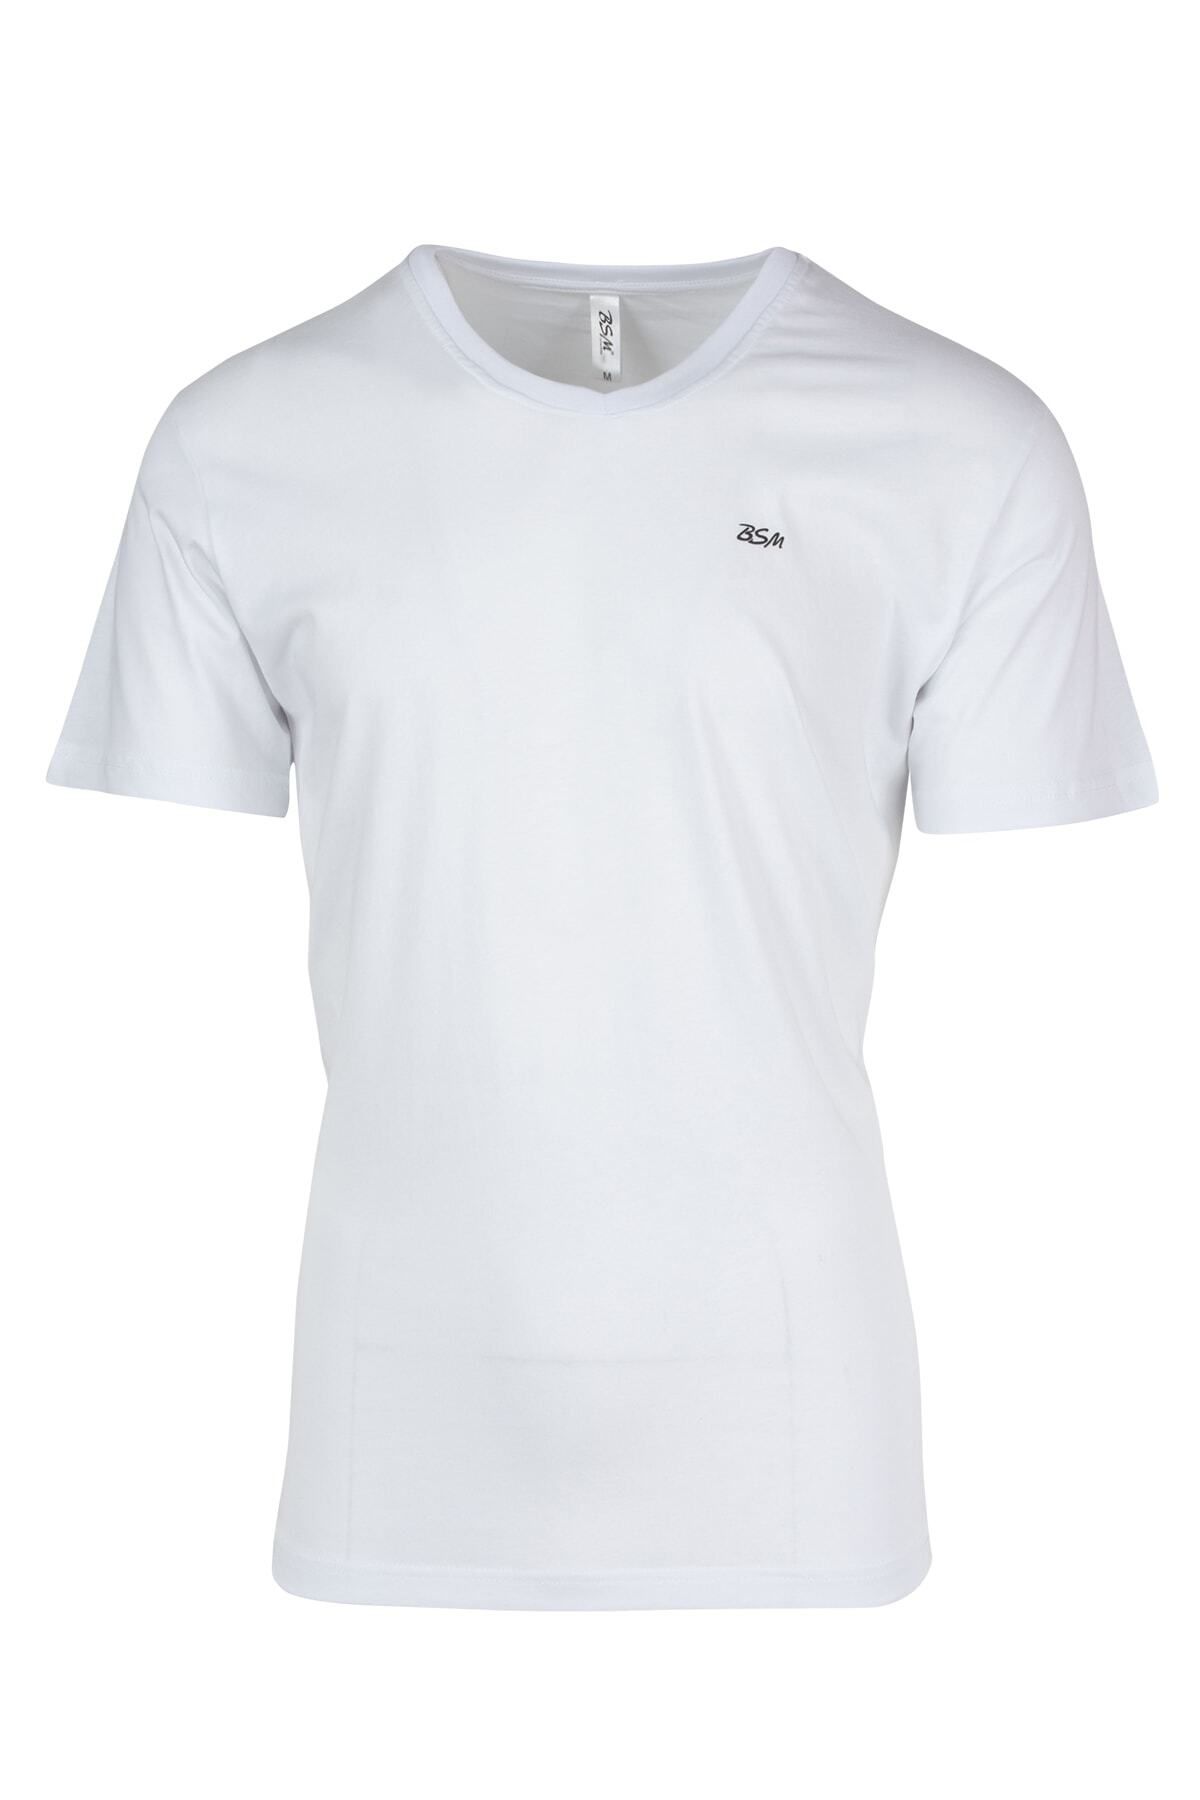 BSM Erkek Yüksek Kalite Sıfır Yaka Beyaz Pamuklu  T-Shirt